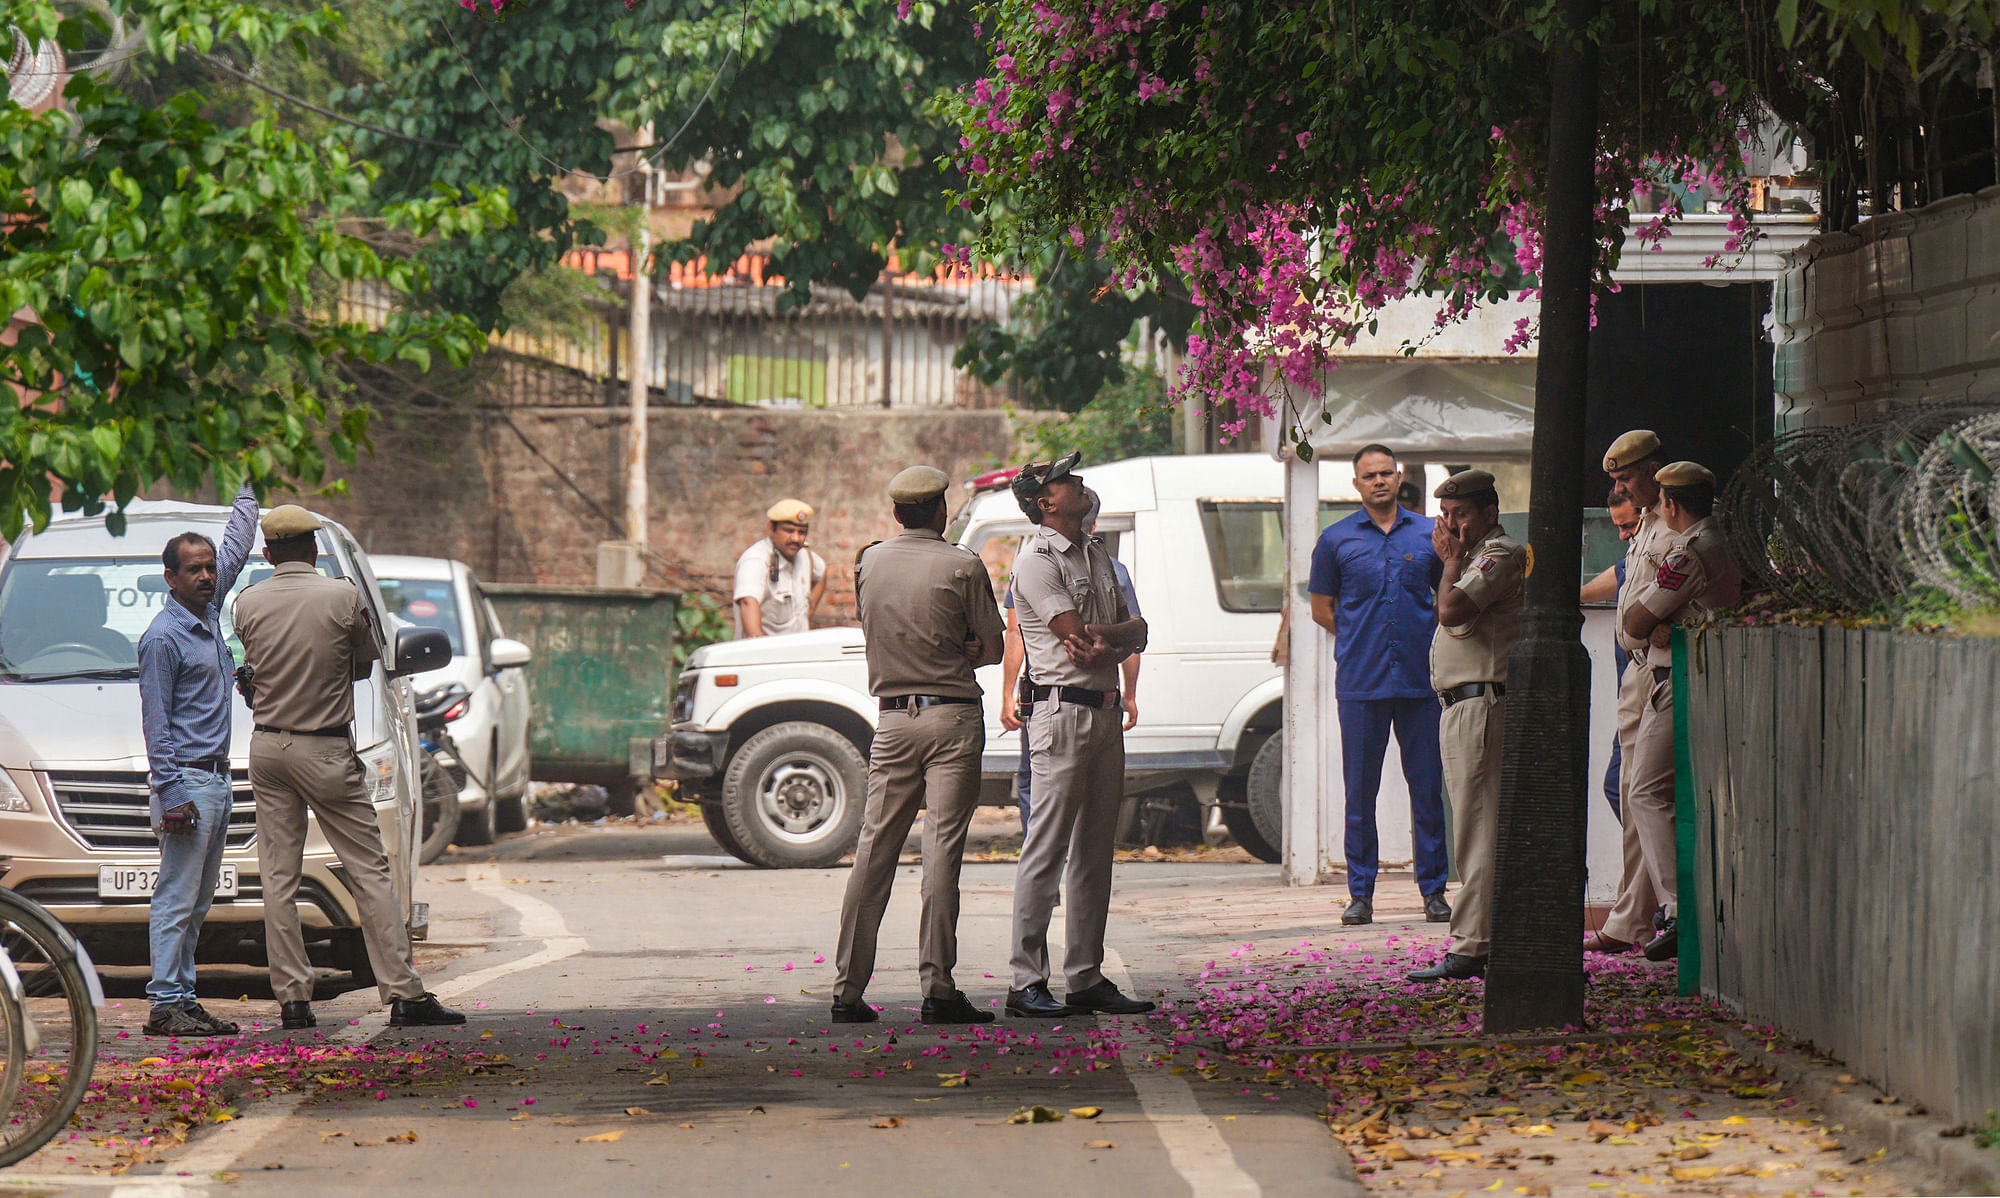 <div class="paragraphs"><p>Delhi Police at Rahul Gandhi's Residence</p></div>